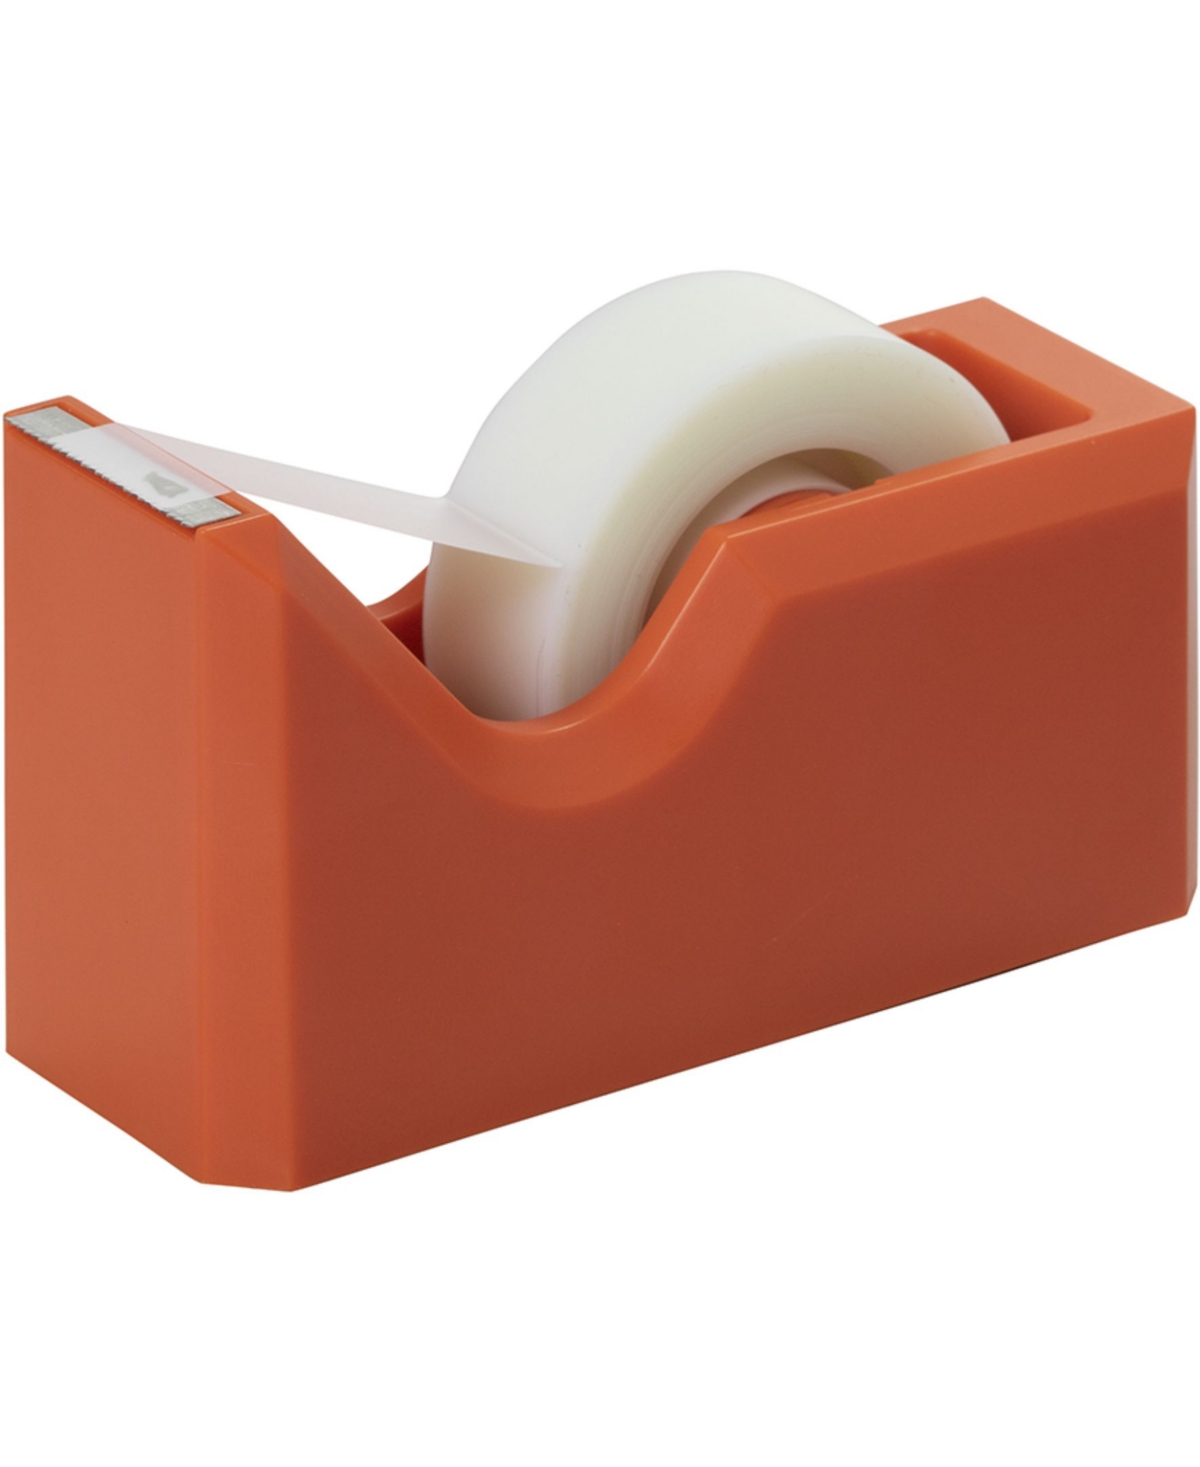 Jam Paper Colorful Desk Tape Dispensers In Orange